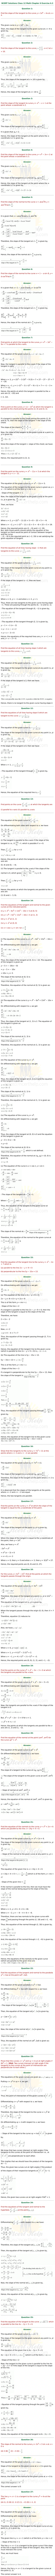 ncert solutions for class 12 Math Chapter 6 ex.6.3